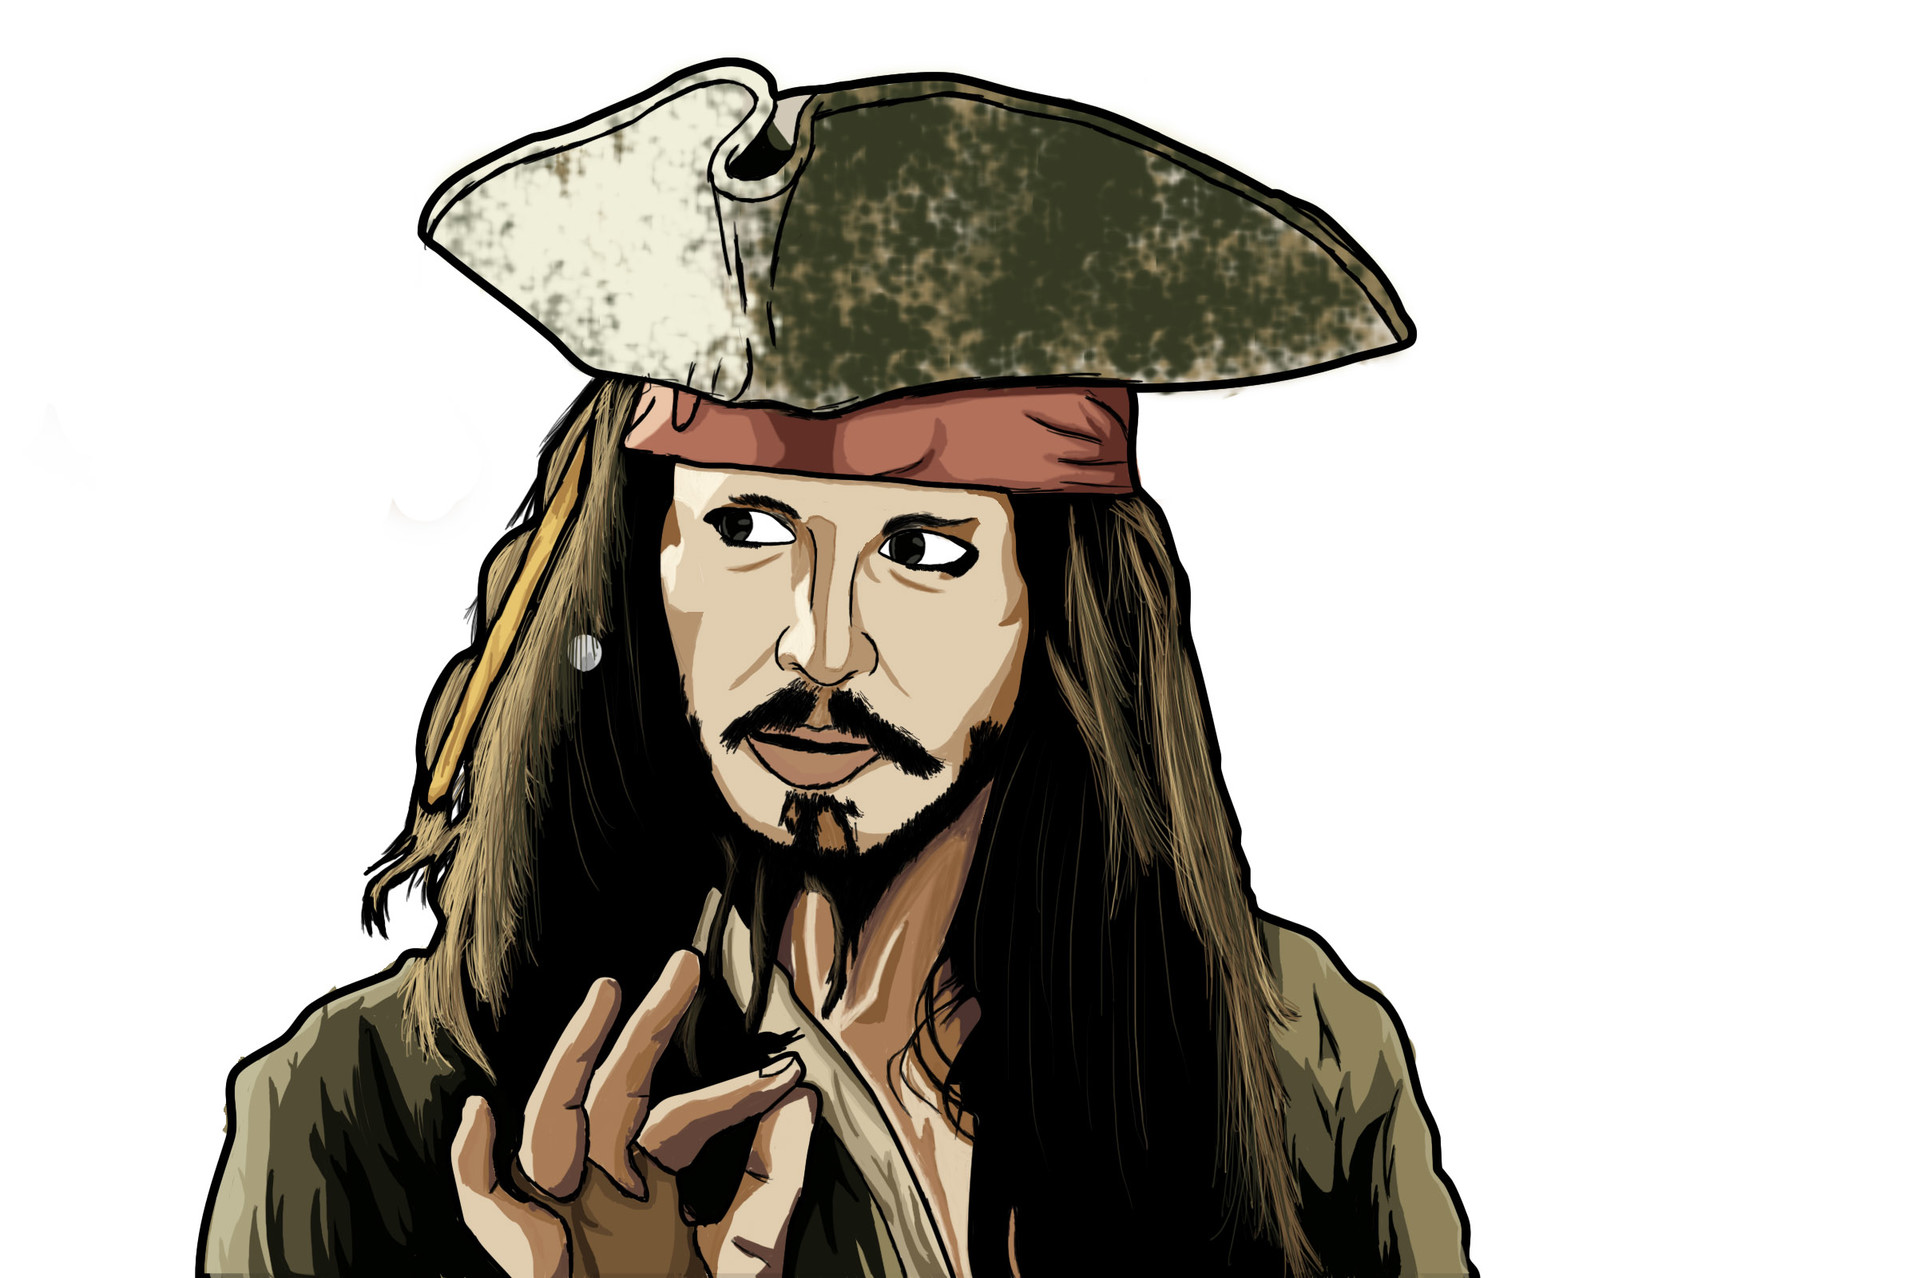 ArtStation - Illustration of Jack Sparrow